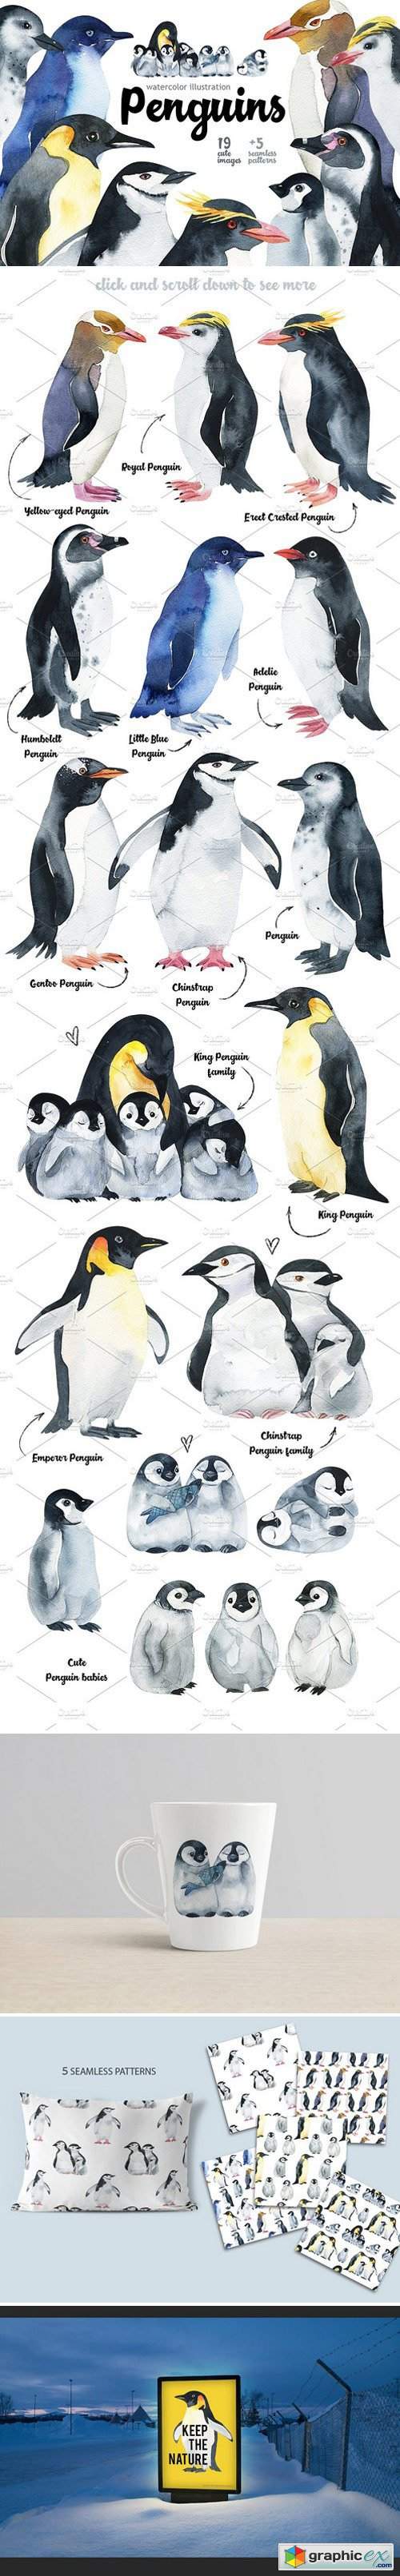 Penguins at the Pole-illustration